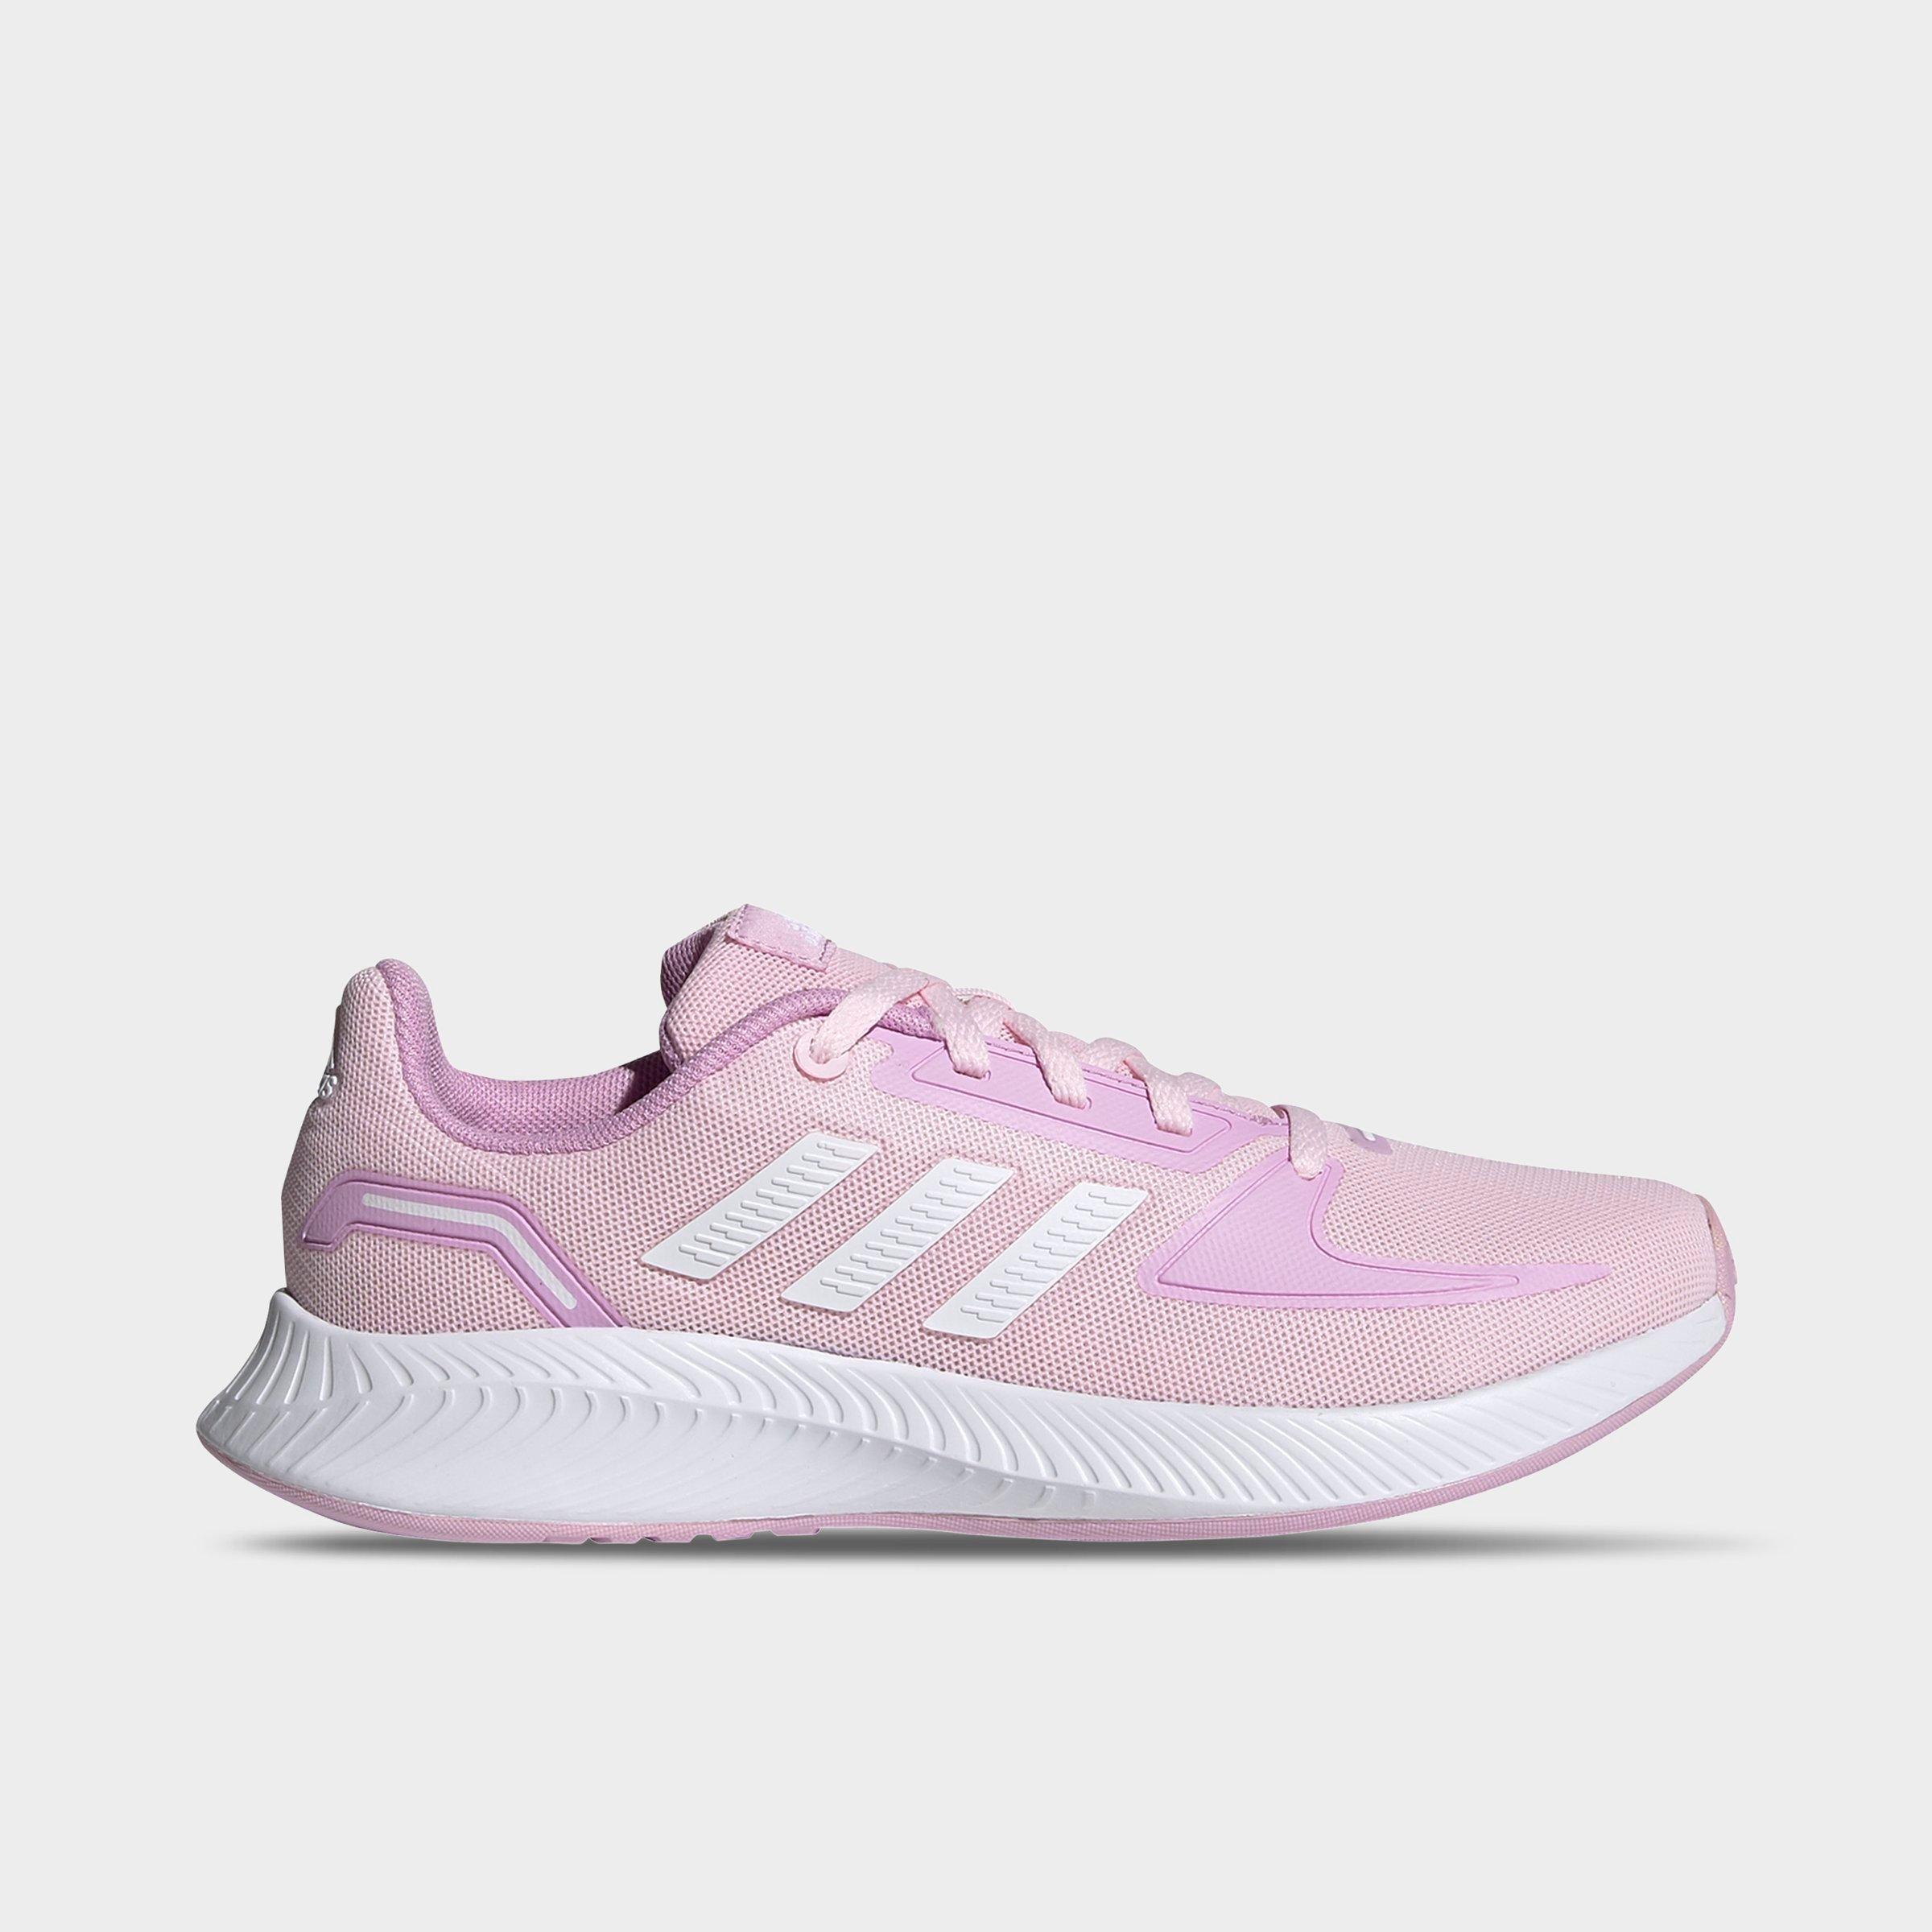 adidas girls shoes size 2